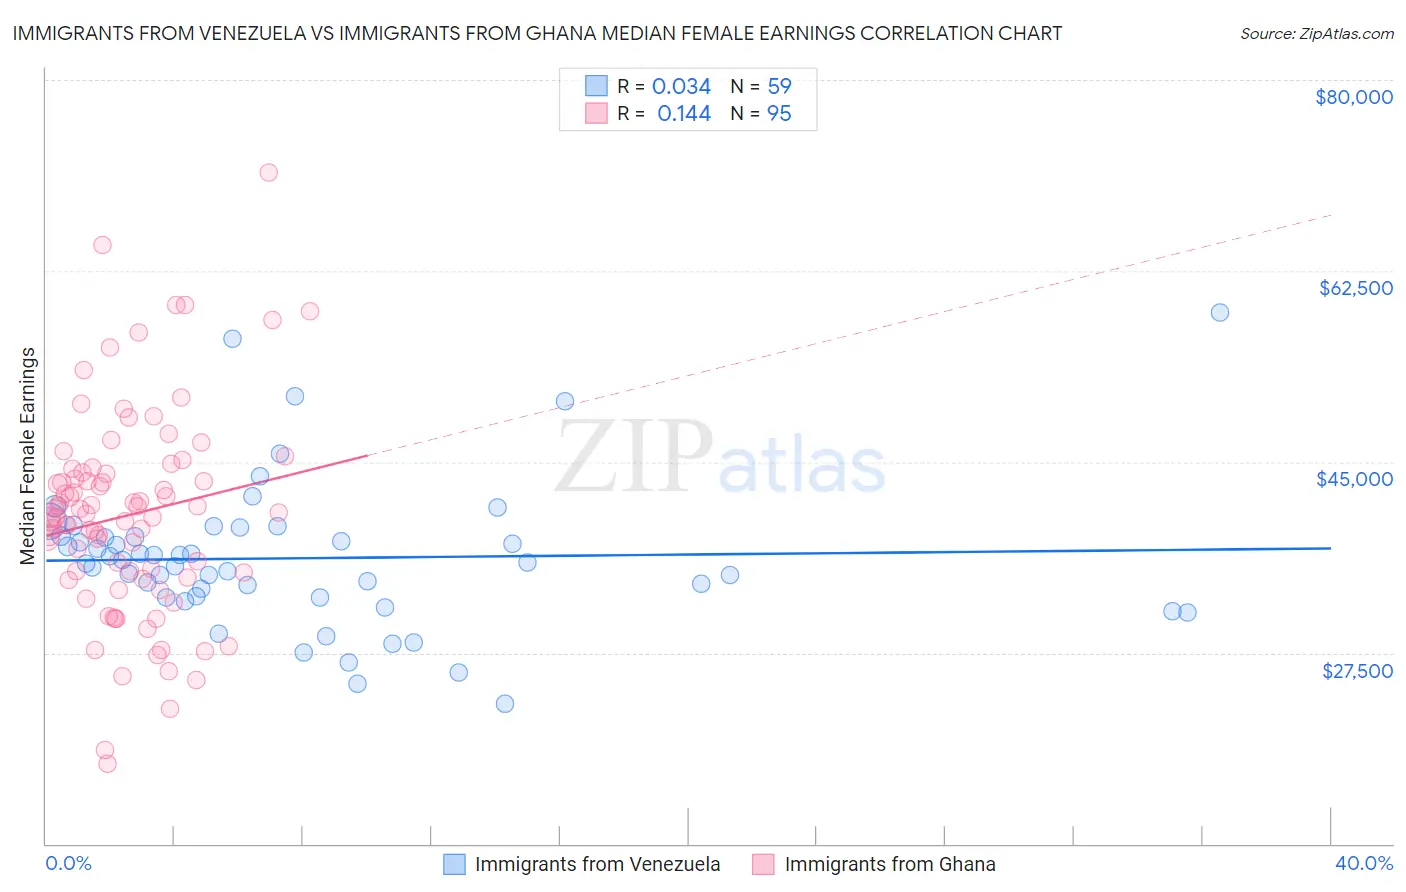 Immigrants from Venezuela vs Immigrants from Ghana Median Female Earnings